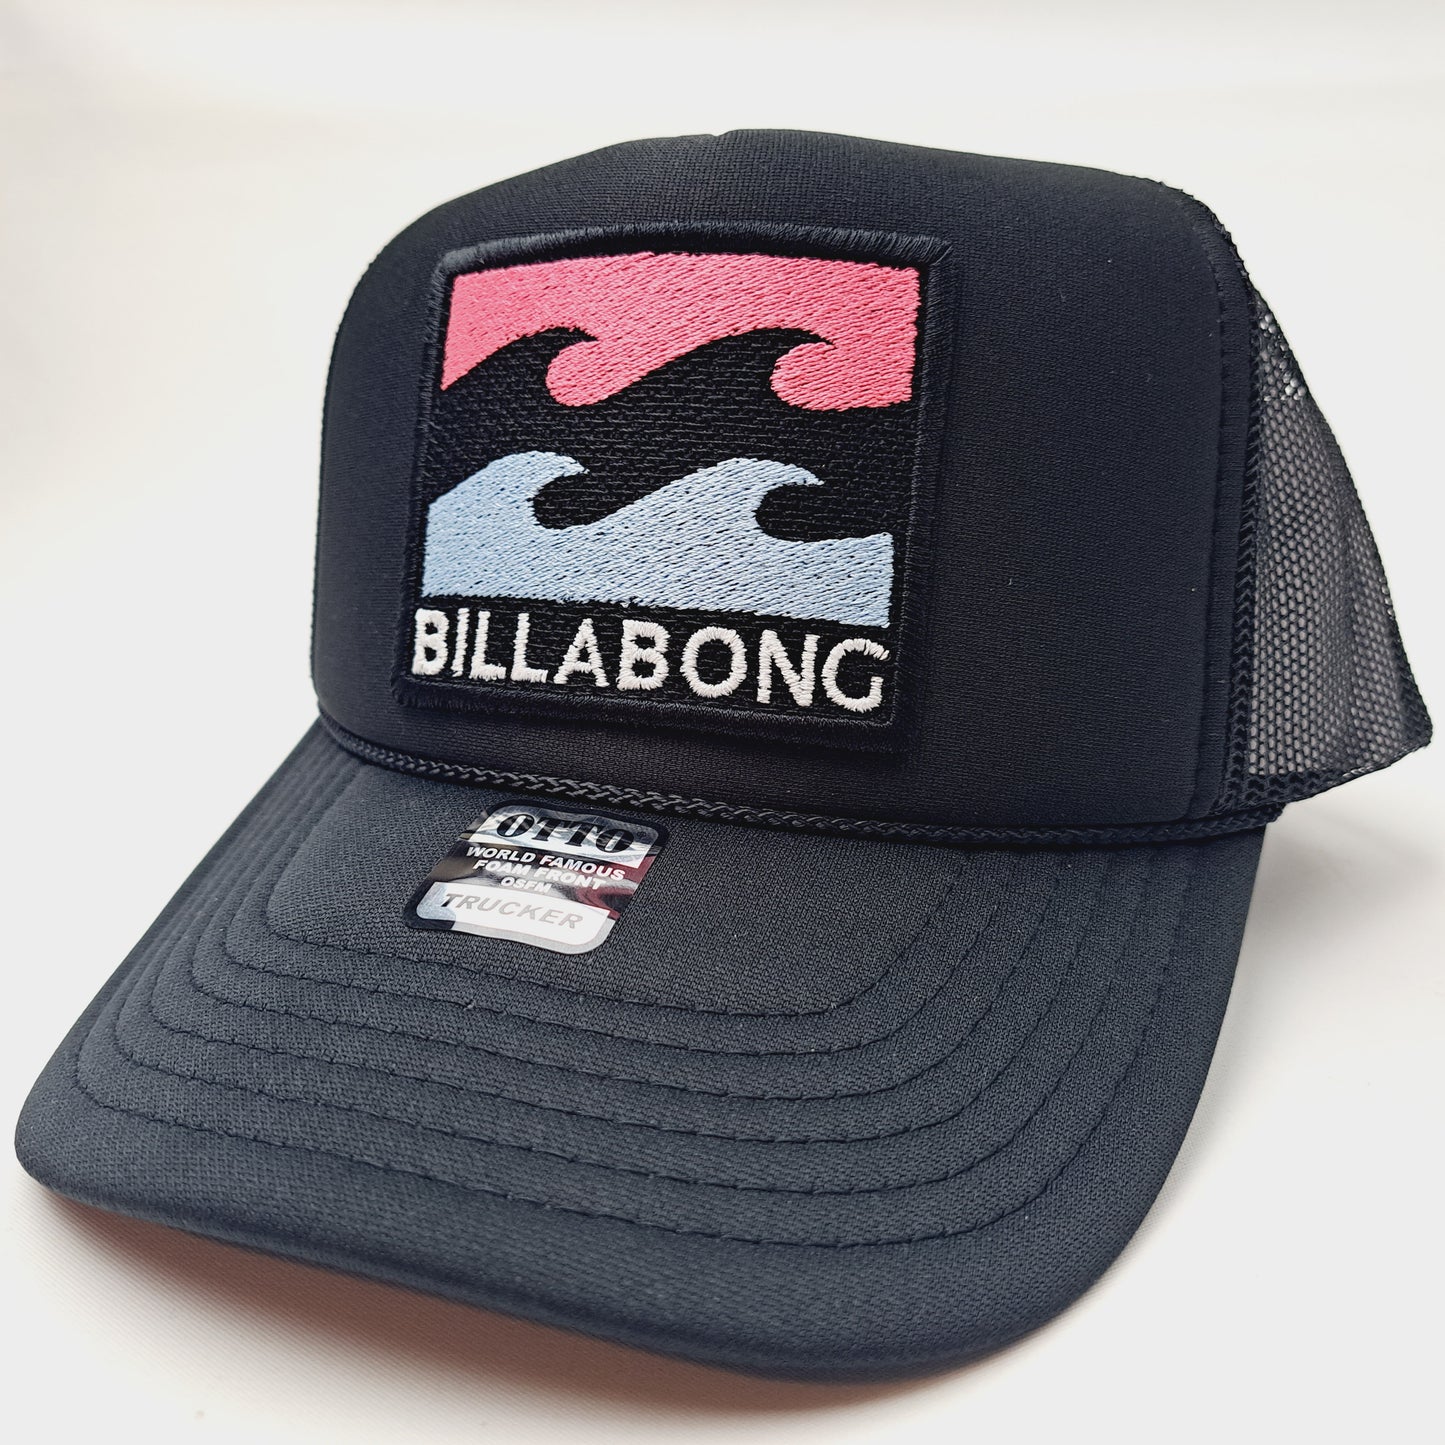 Billabong Embroidered Patch Foam Trucker Mesh Cap Hat Black Snapback